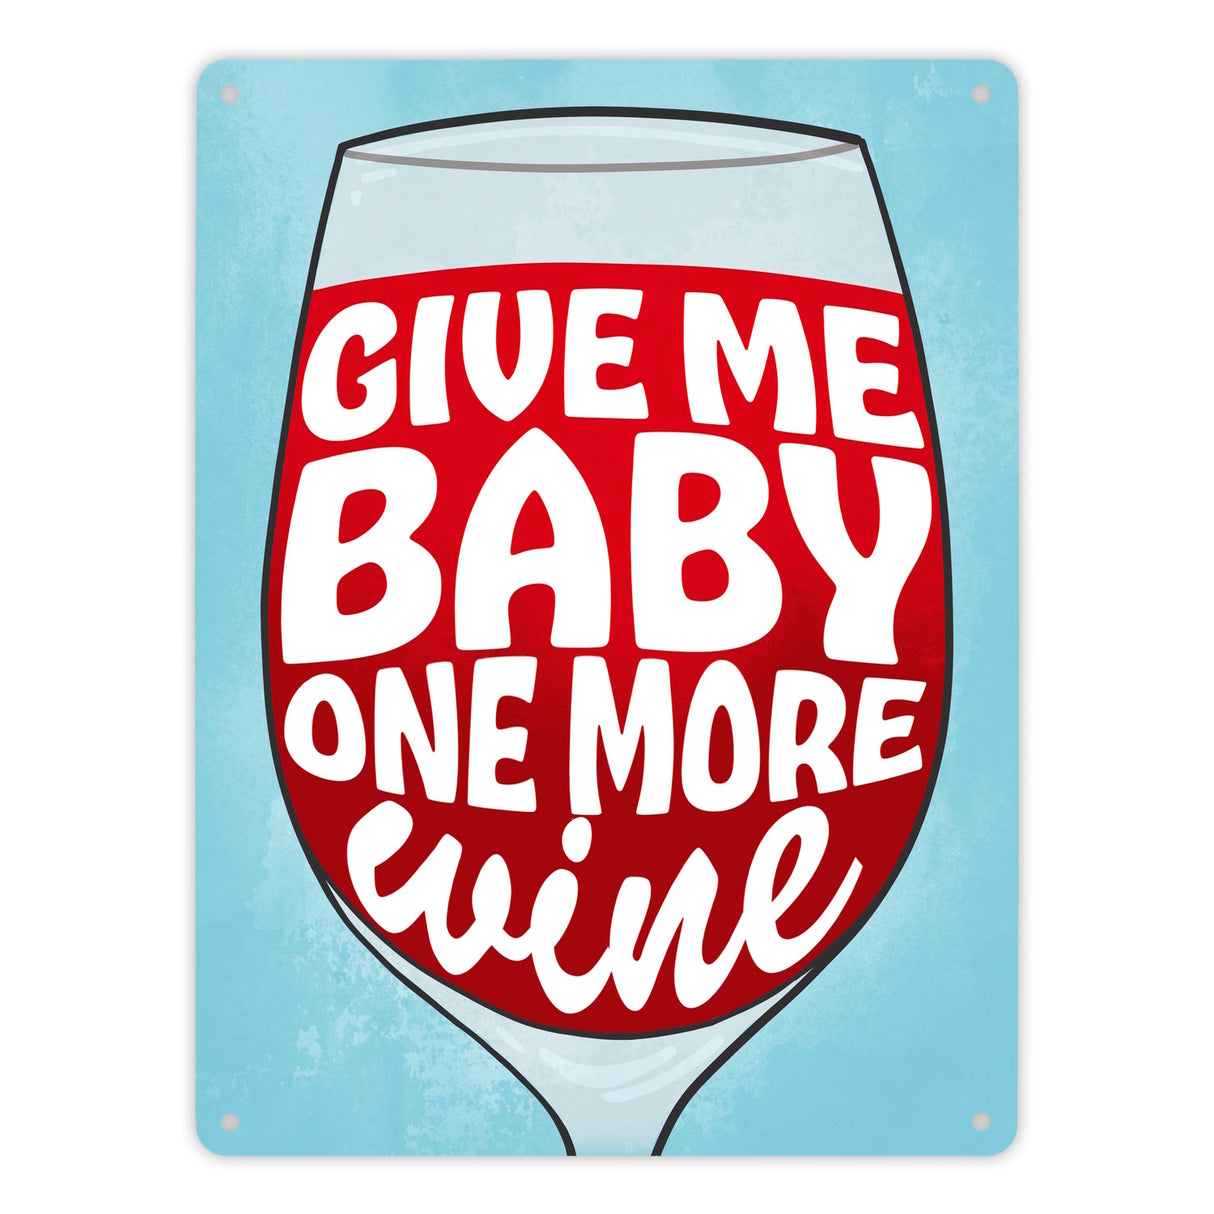 Give me baby one more wine Metallschild mit Weinglas